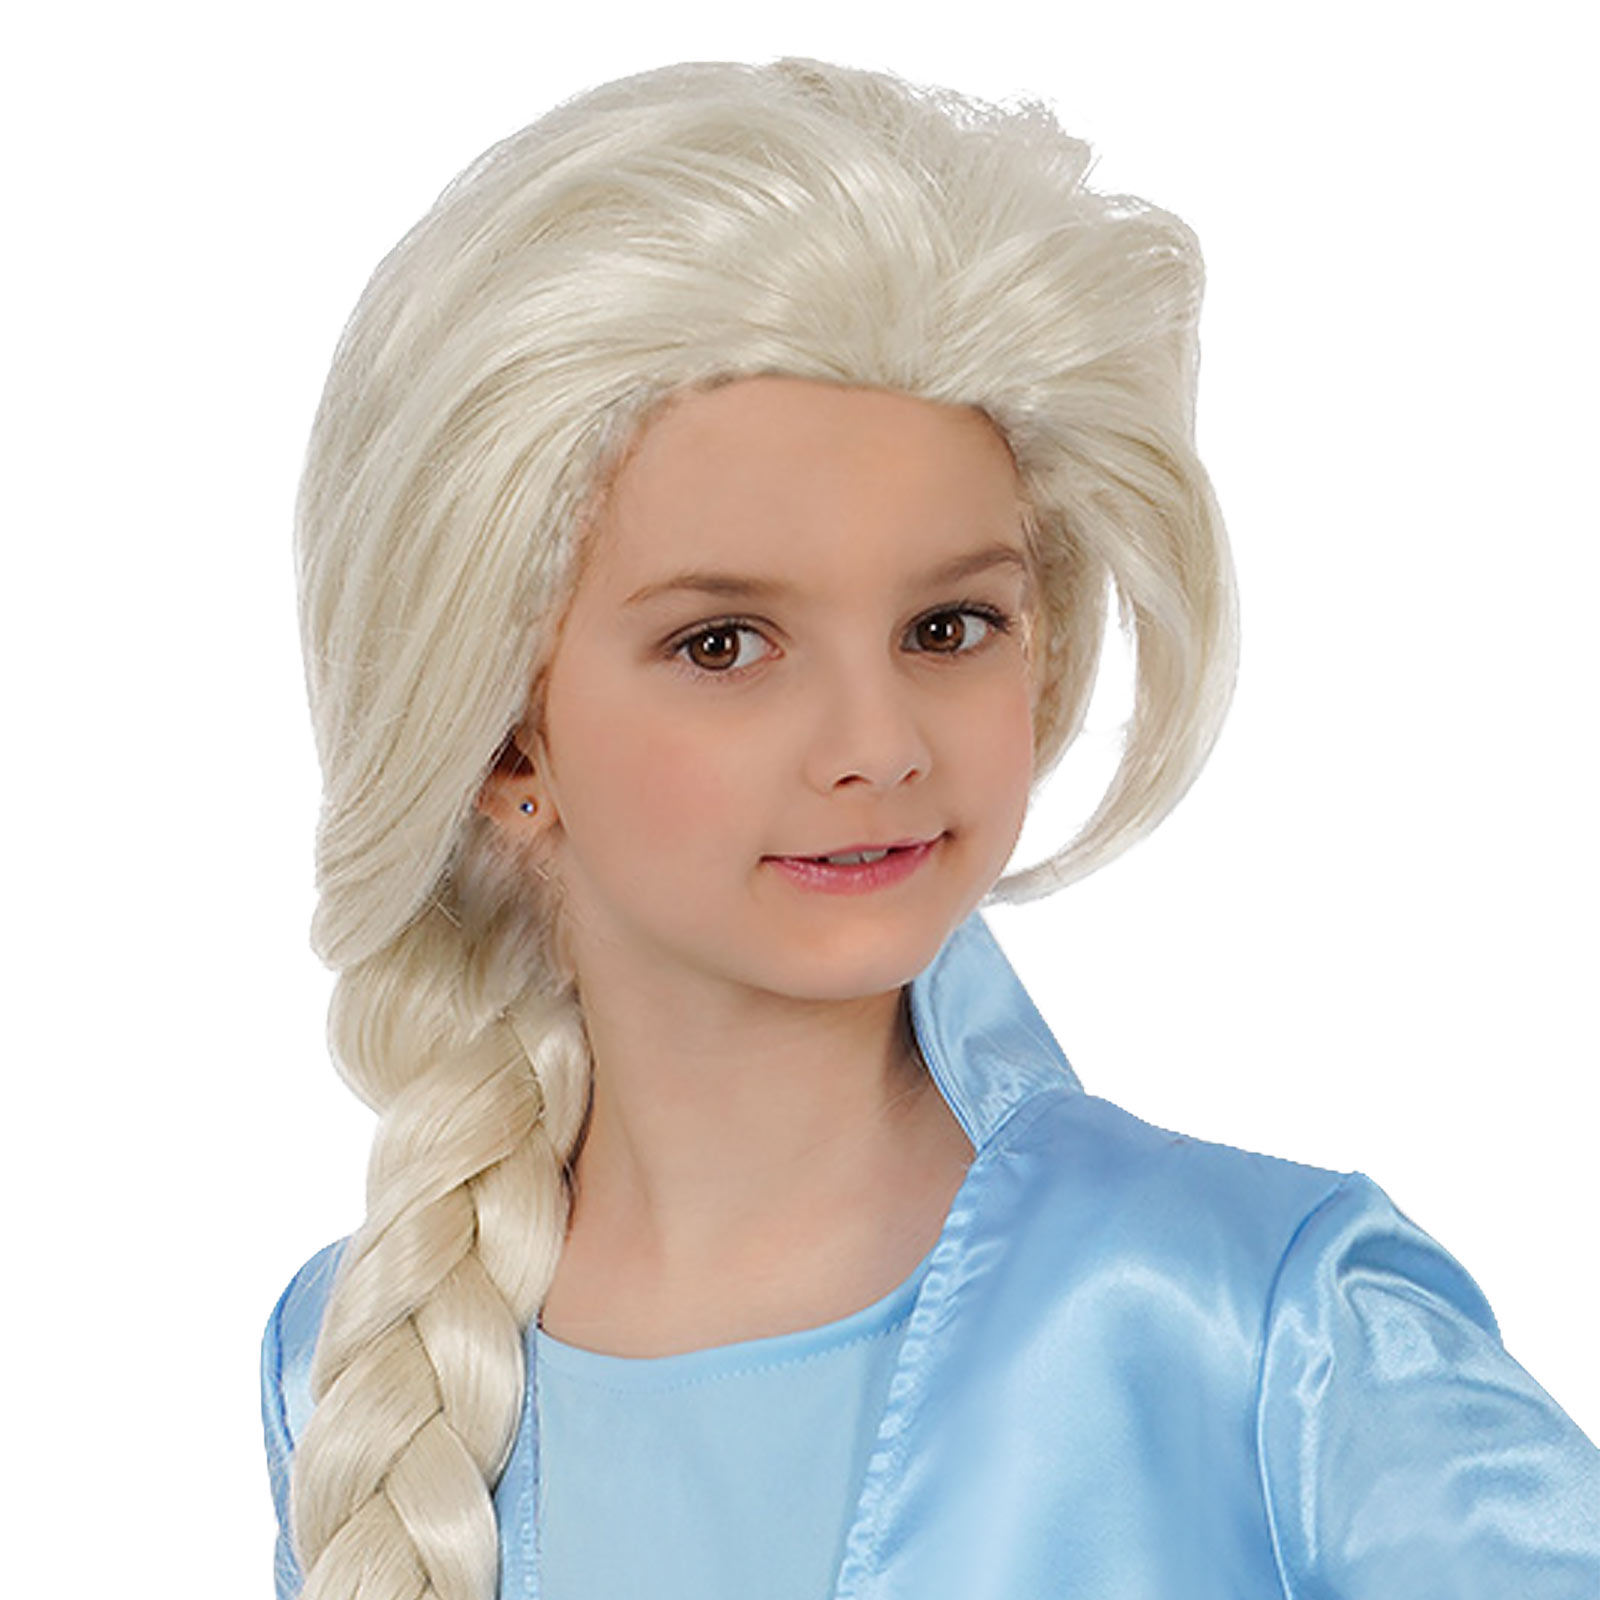 Elsa Children's Costume Wig for Frozen Fans